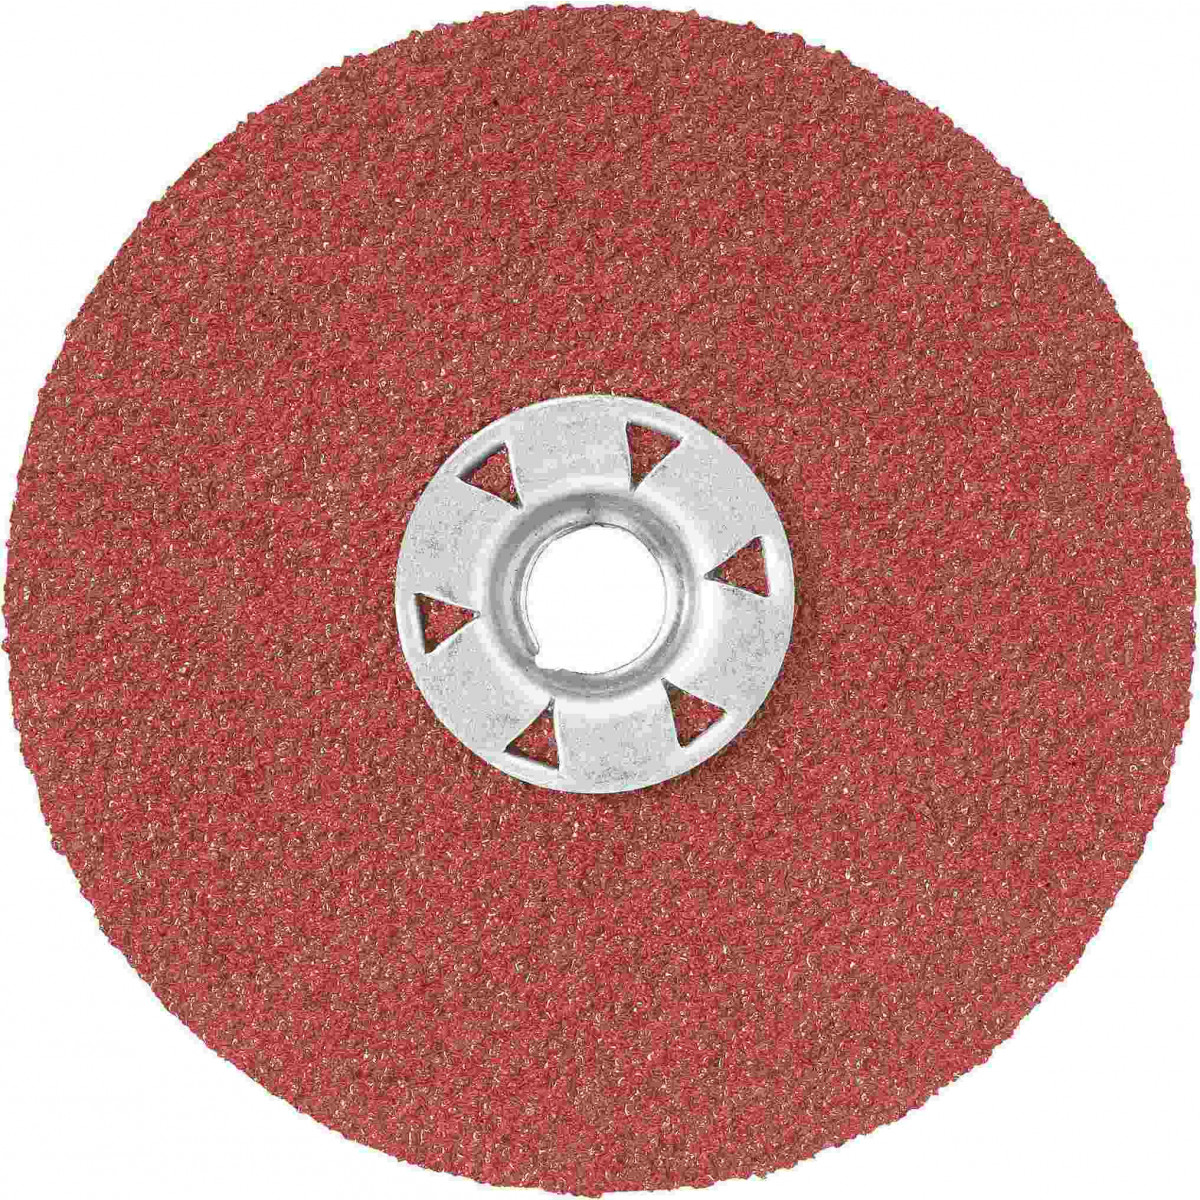 7 x 5/8 80G Ceramic Resin Fibre Disc